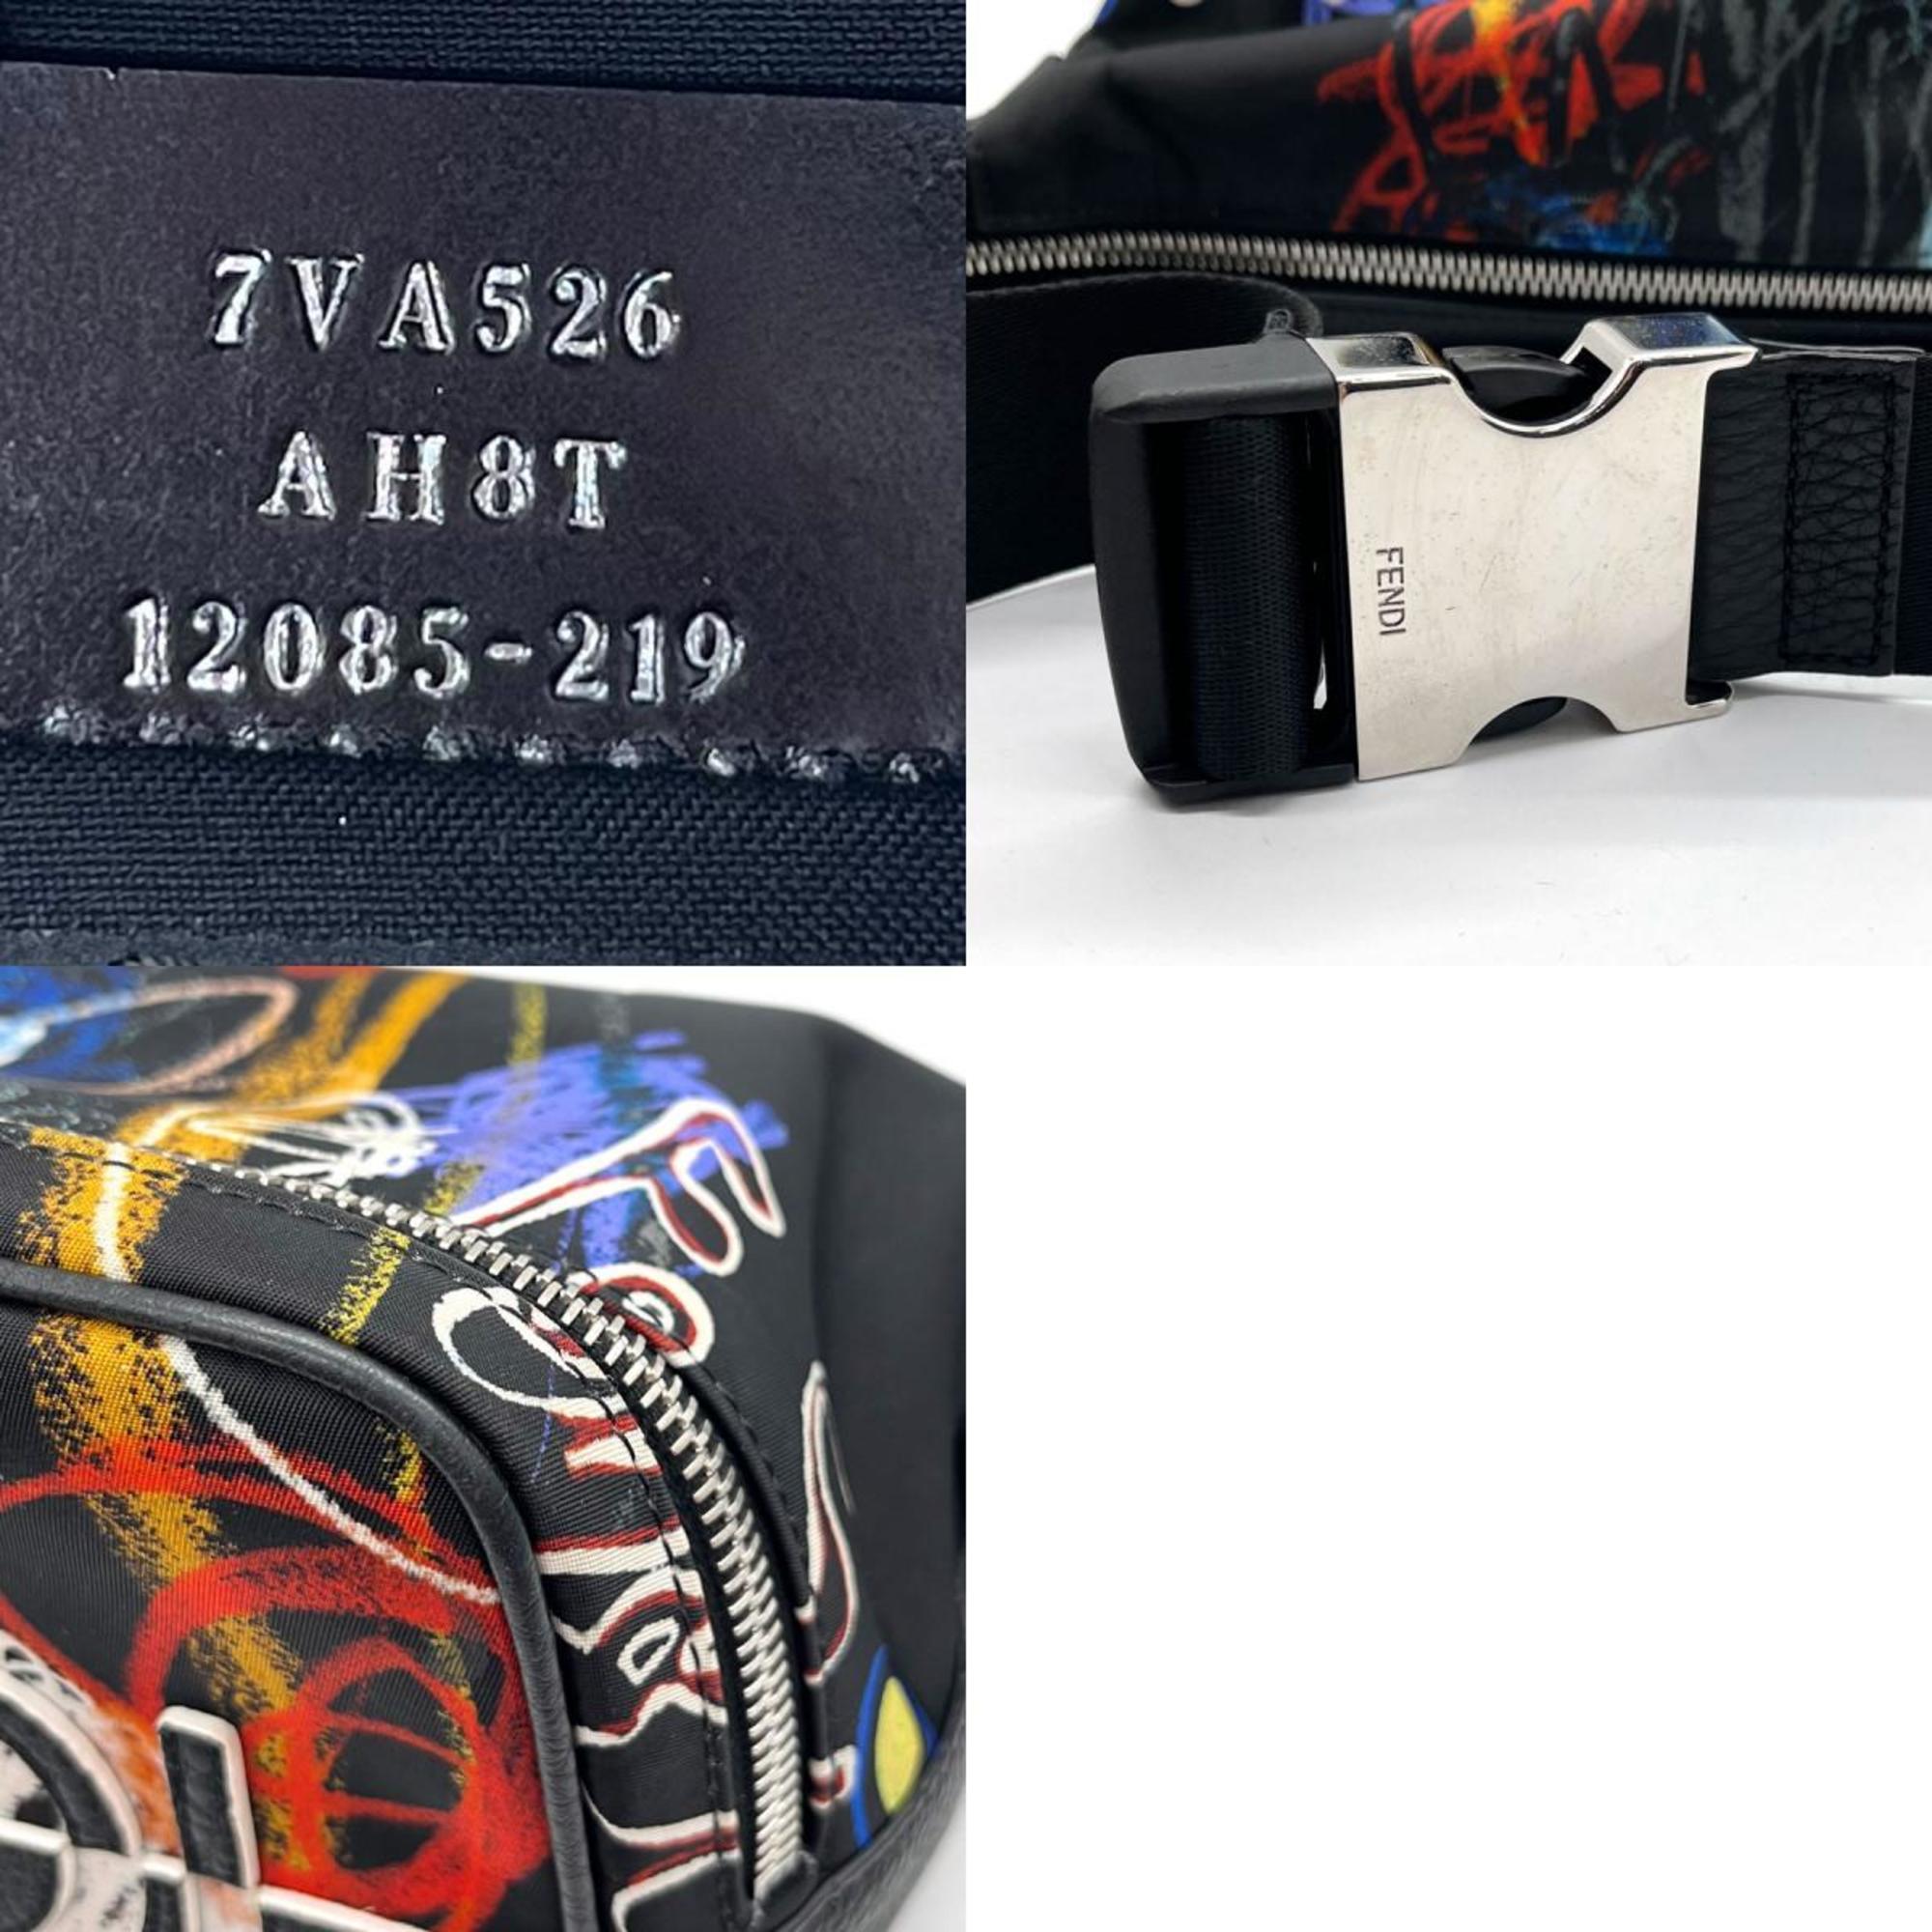 FENDI Body Bag Crossbody Shoulder Nylon/Leather Black/Multicolor Silver Men's